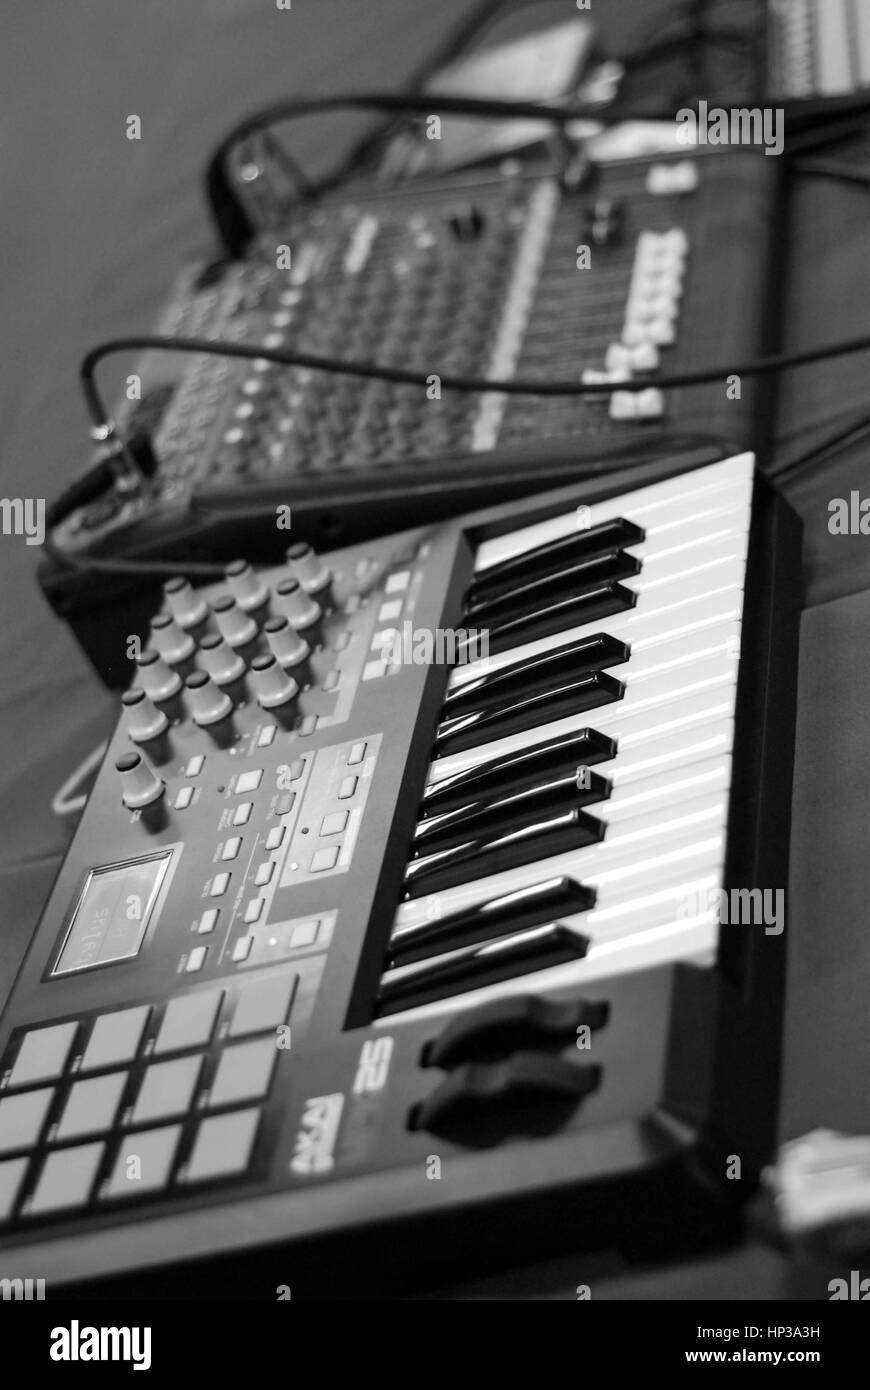 MIDI controller keyboard black and white Stock Photo